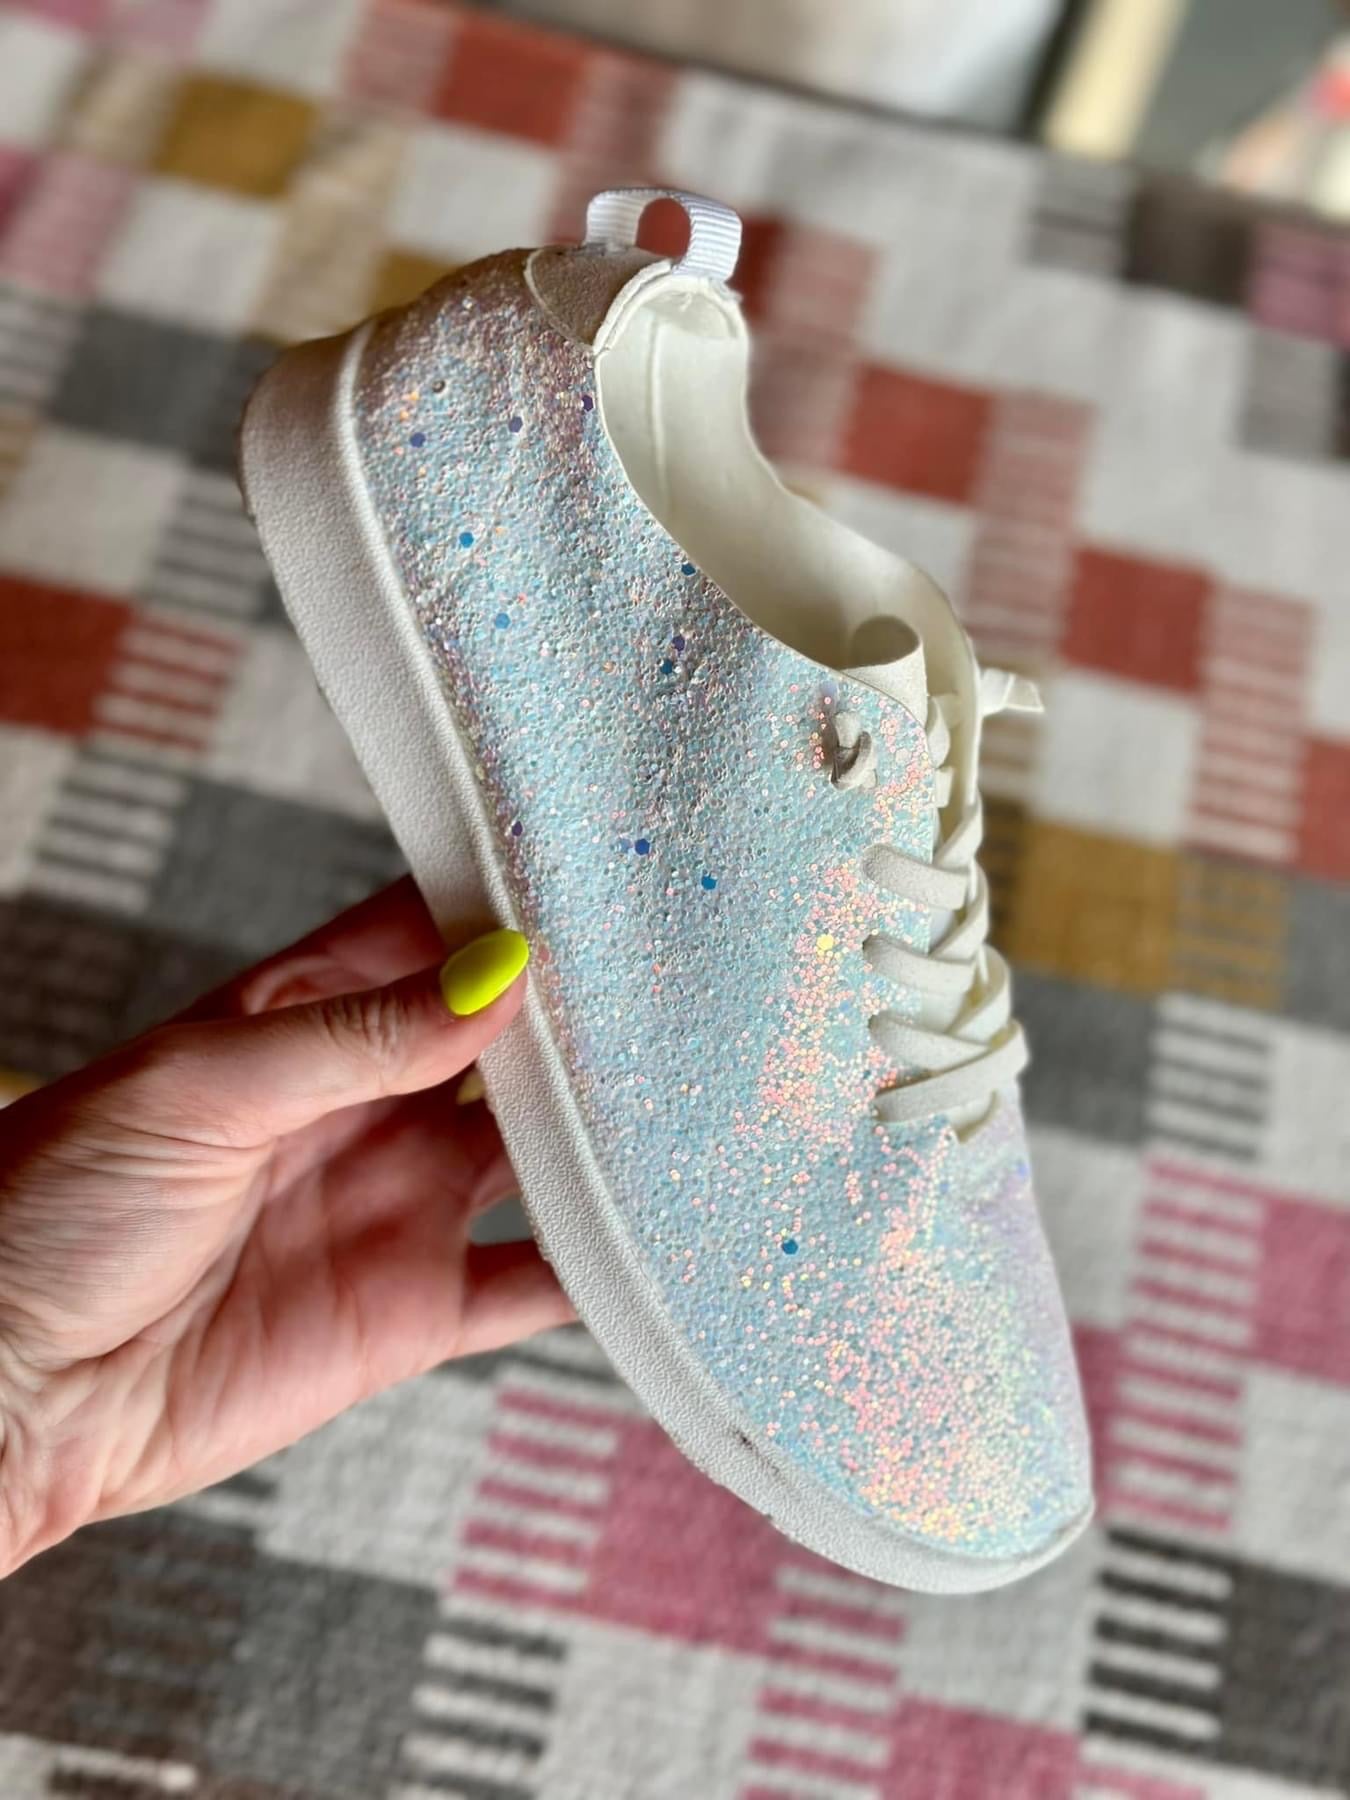 Mayo Glitter Sneakers in White White / 6